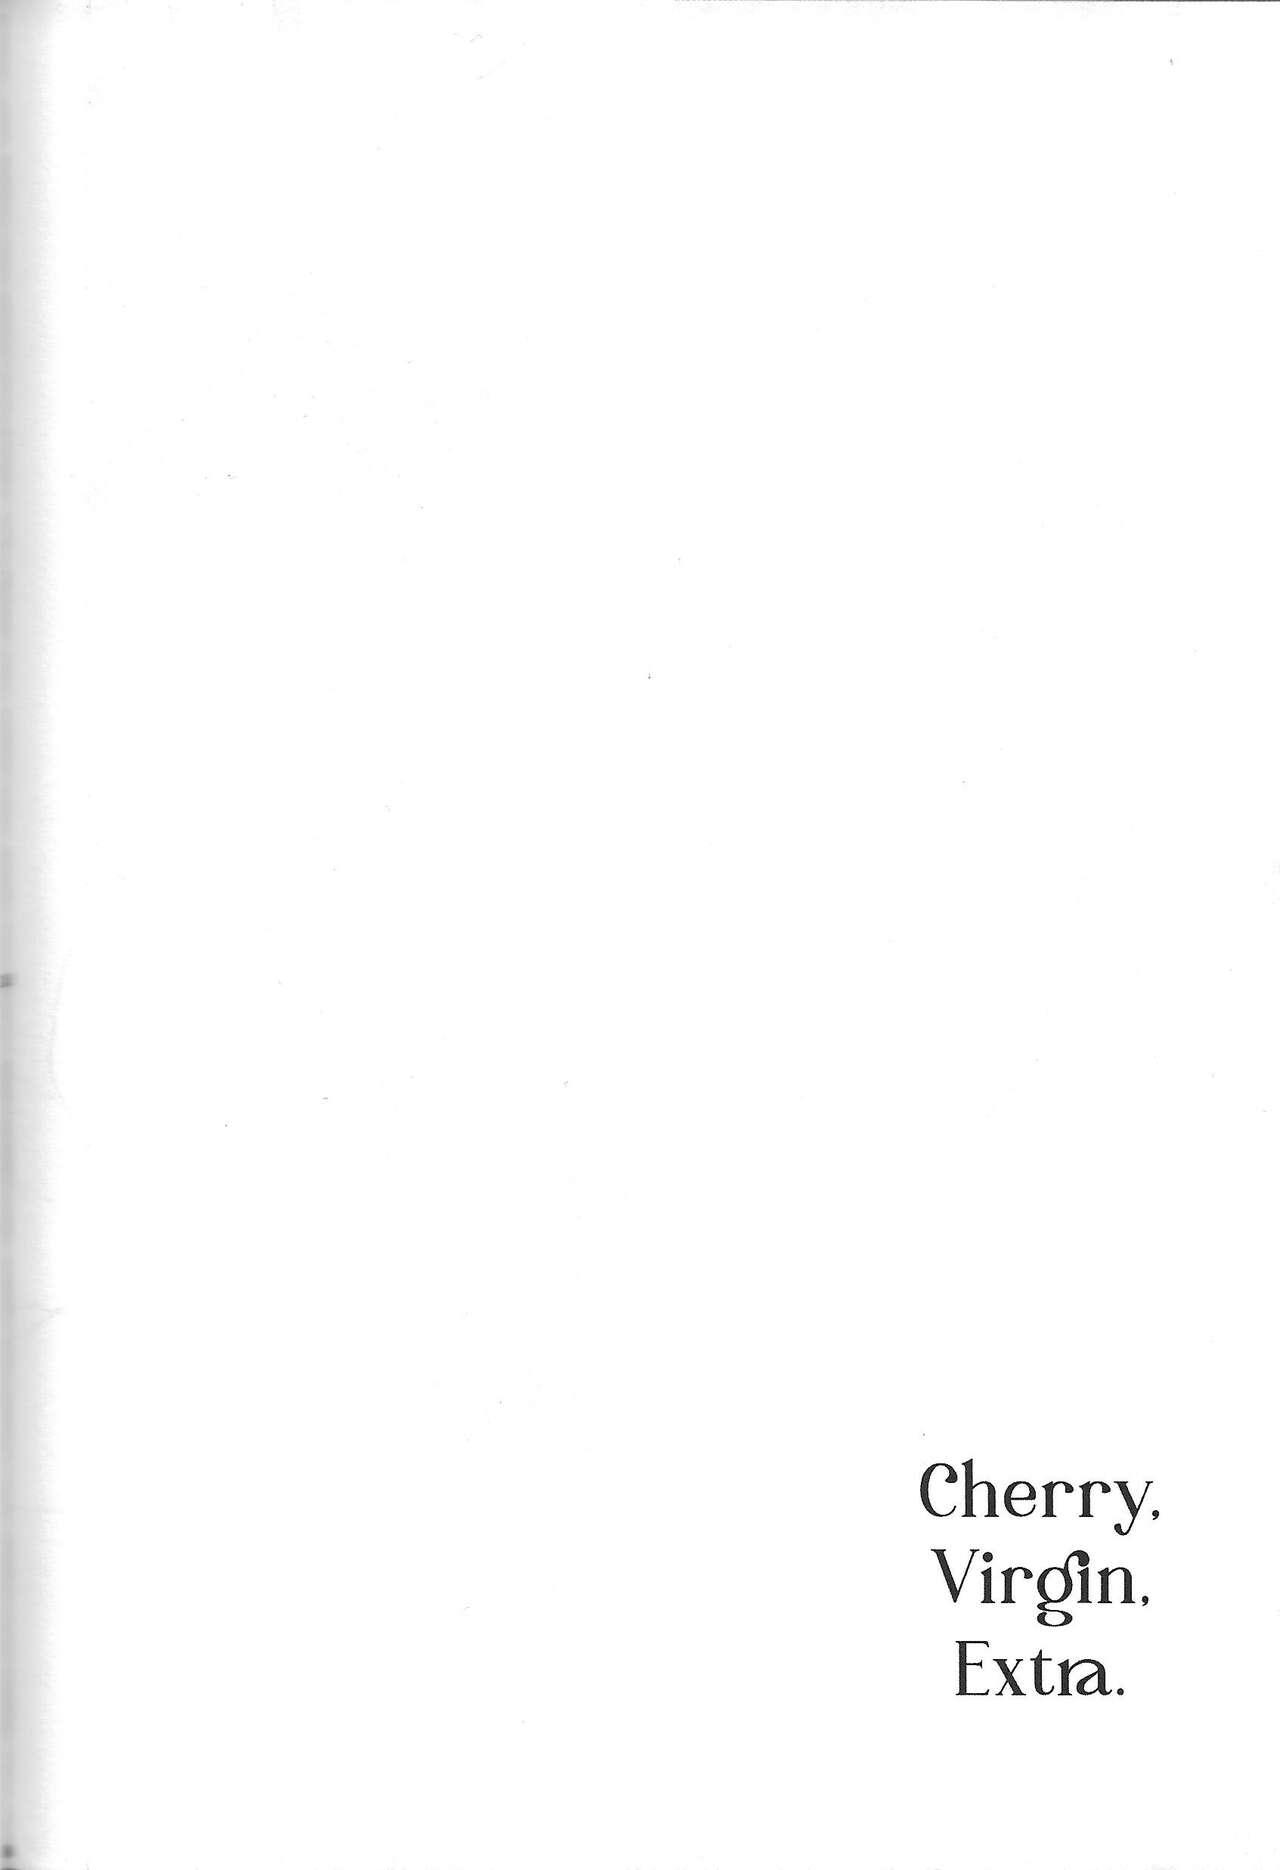 Cherry, Virgin, Extra. 112